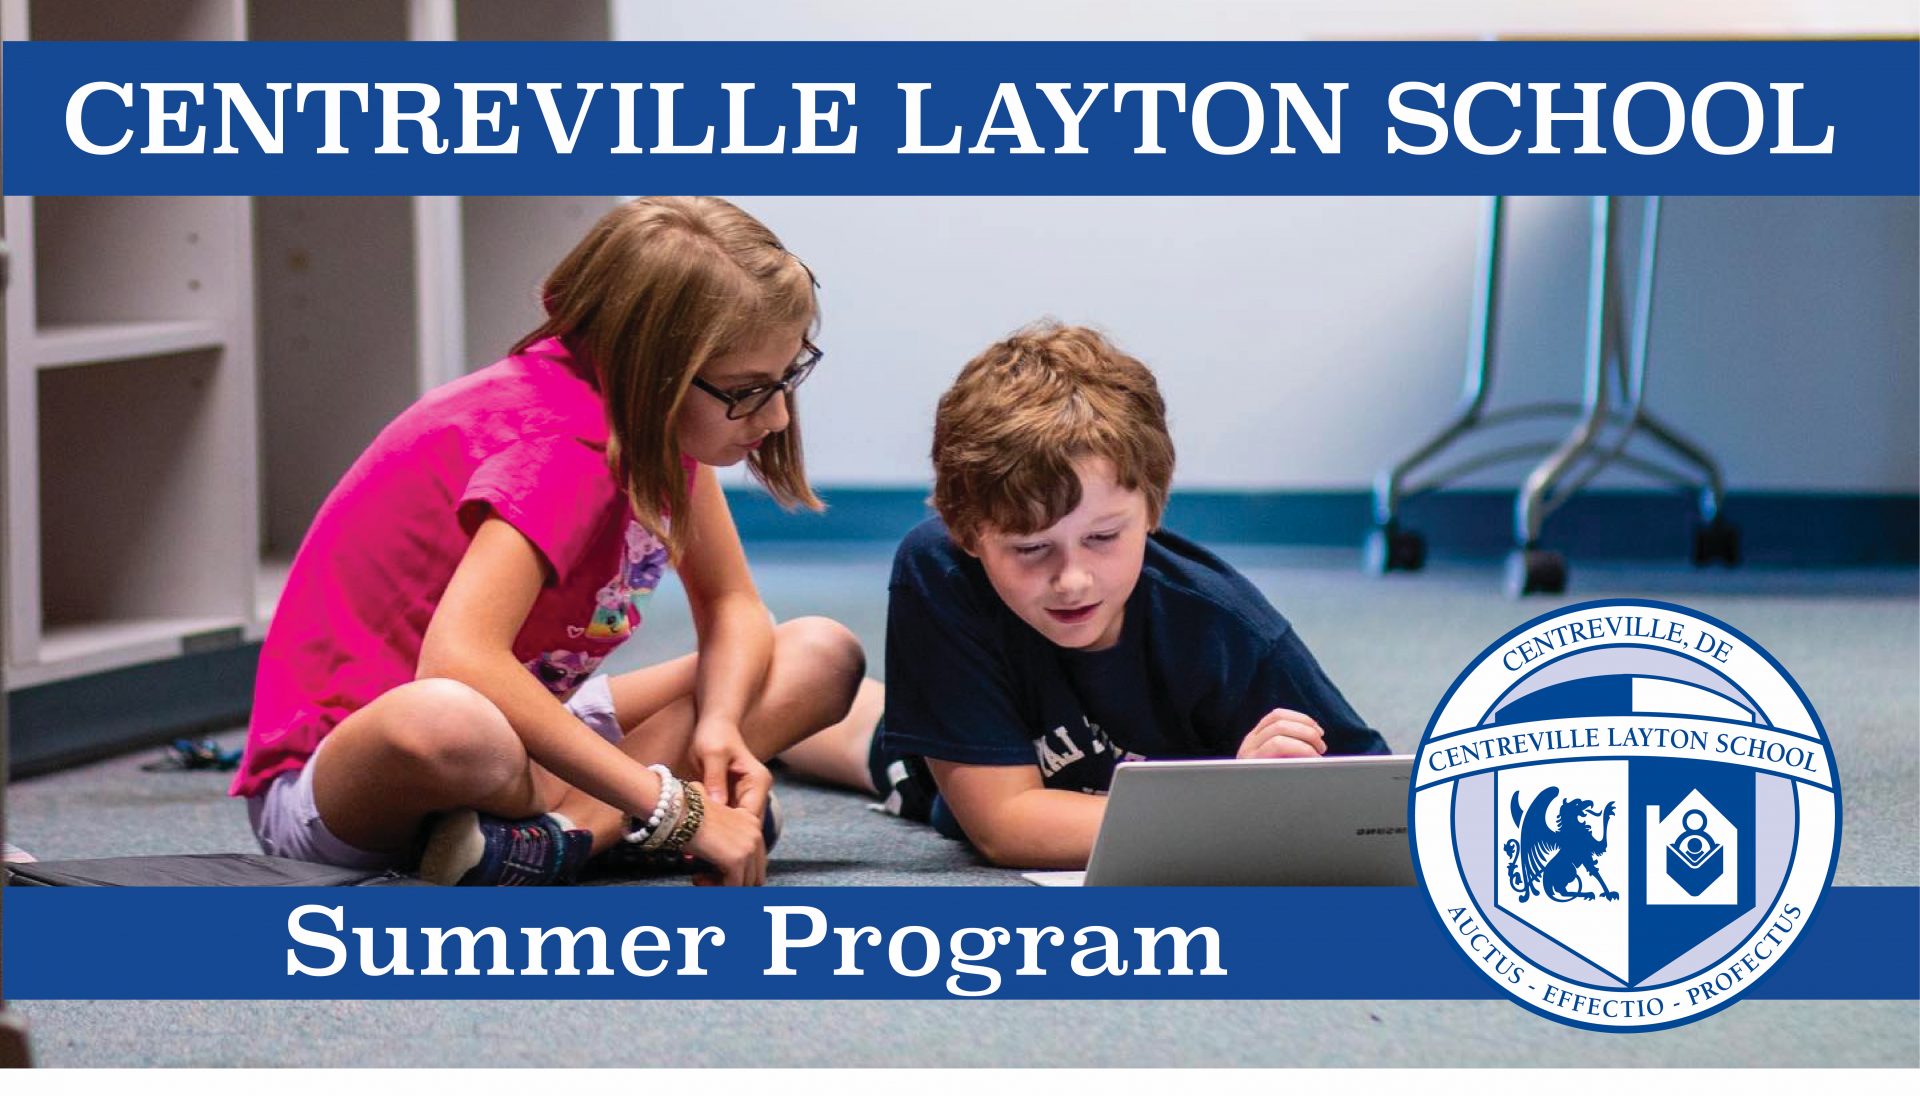 Summer Program Learn More Centreville Layton School